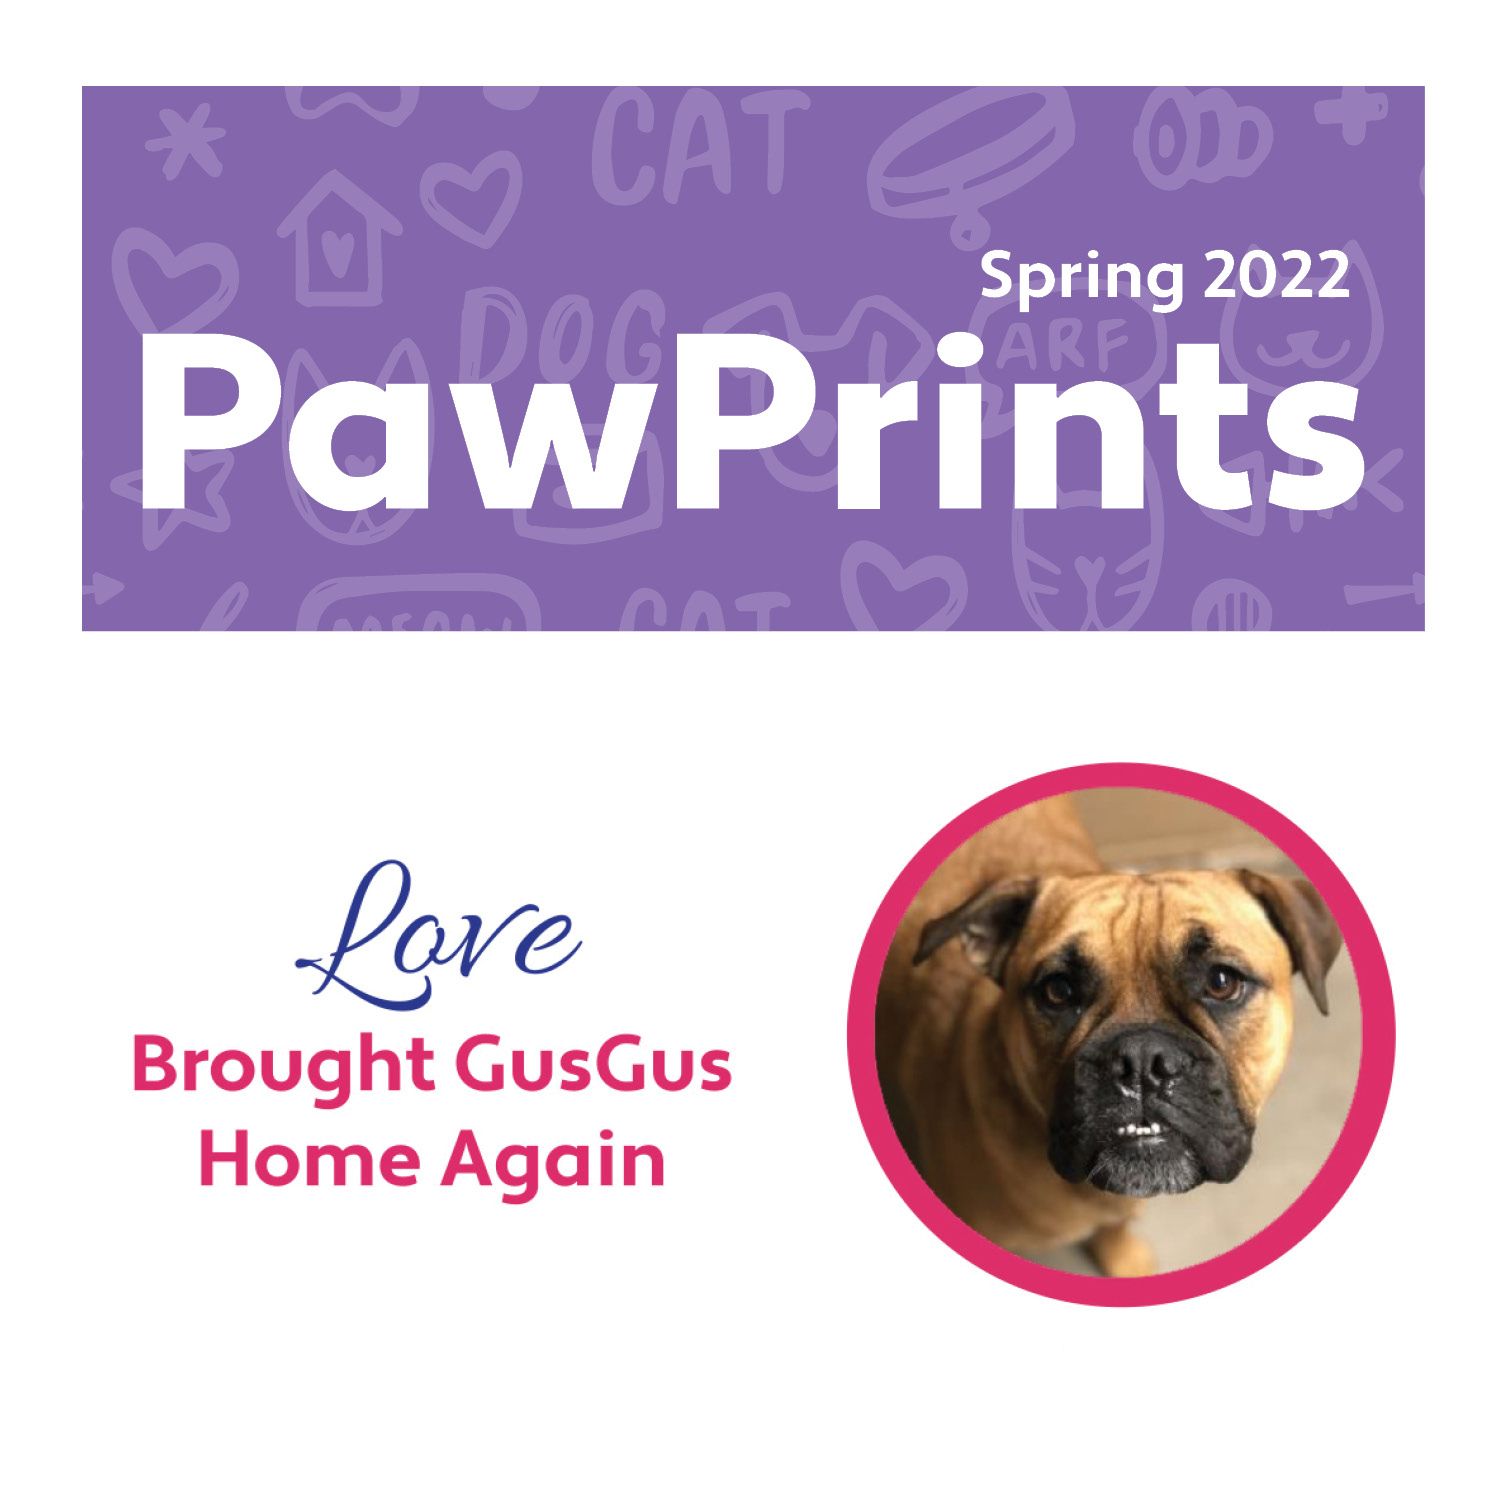 Spring 2022 PawPrints Newsletter